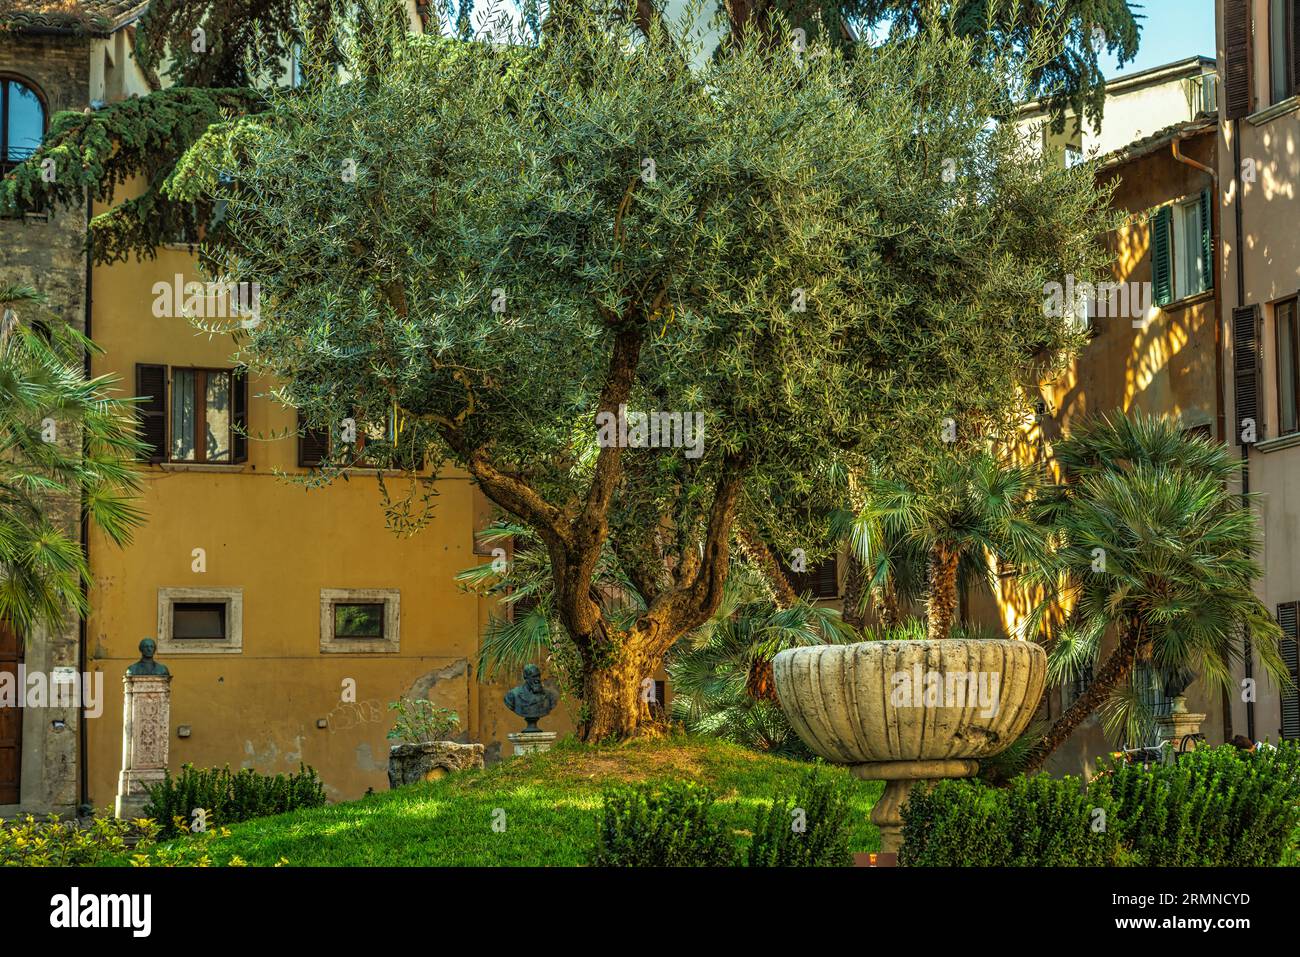 Olive tree of the species "Oliva tenera ascolana". The famous food Oliva Ascolana is produced from this species. Ascoli Piceno, Marche region, Italy, Stock Photo